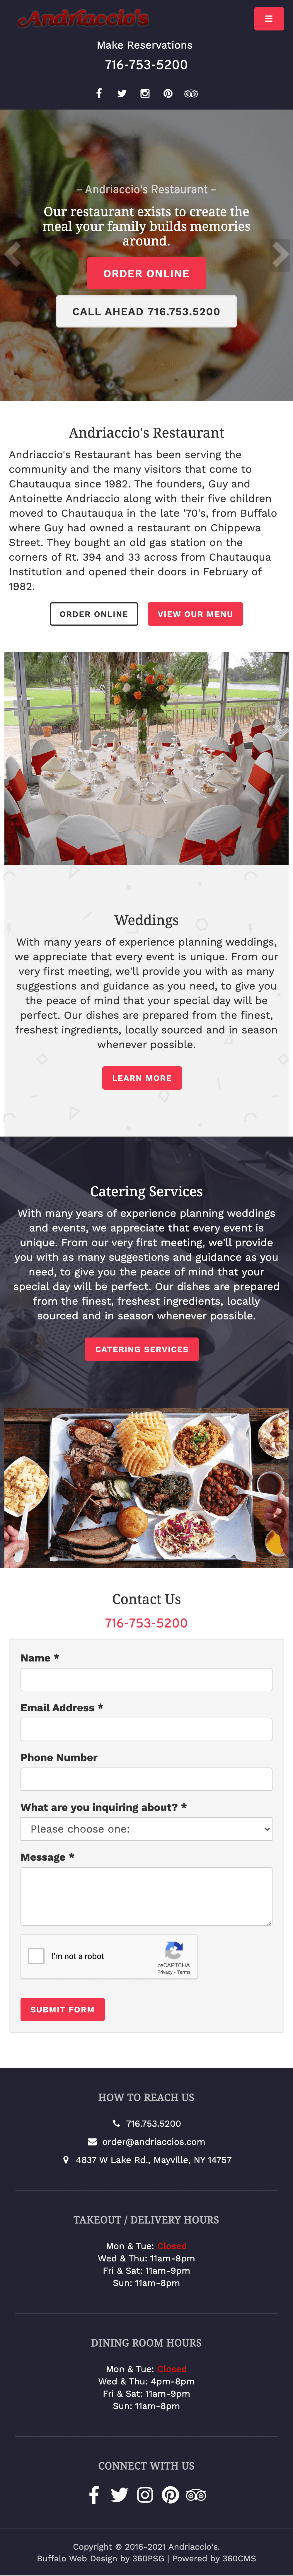 Andriaccio's Restaurant Website - Mobile